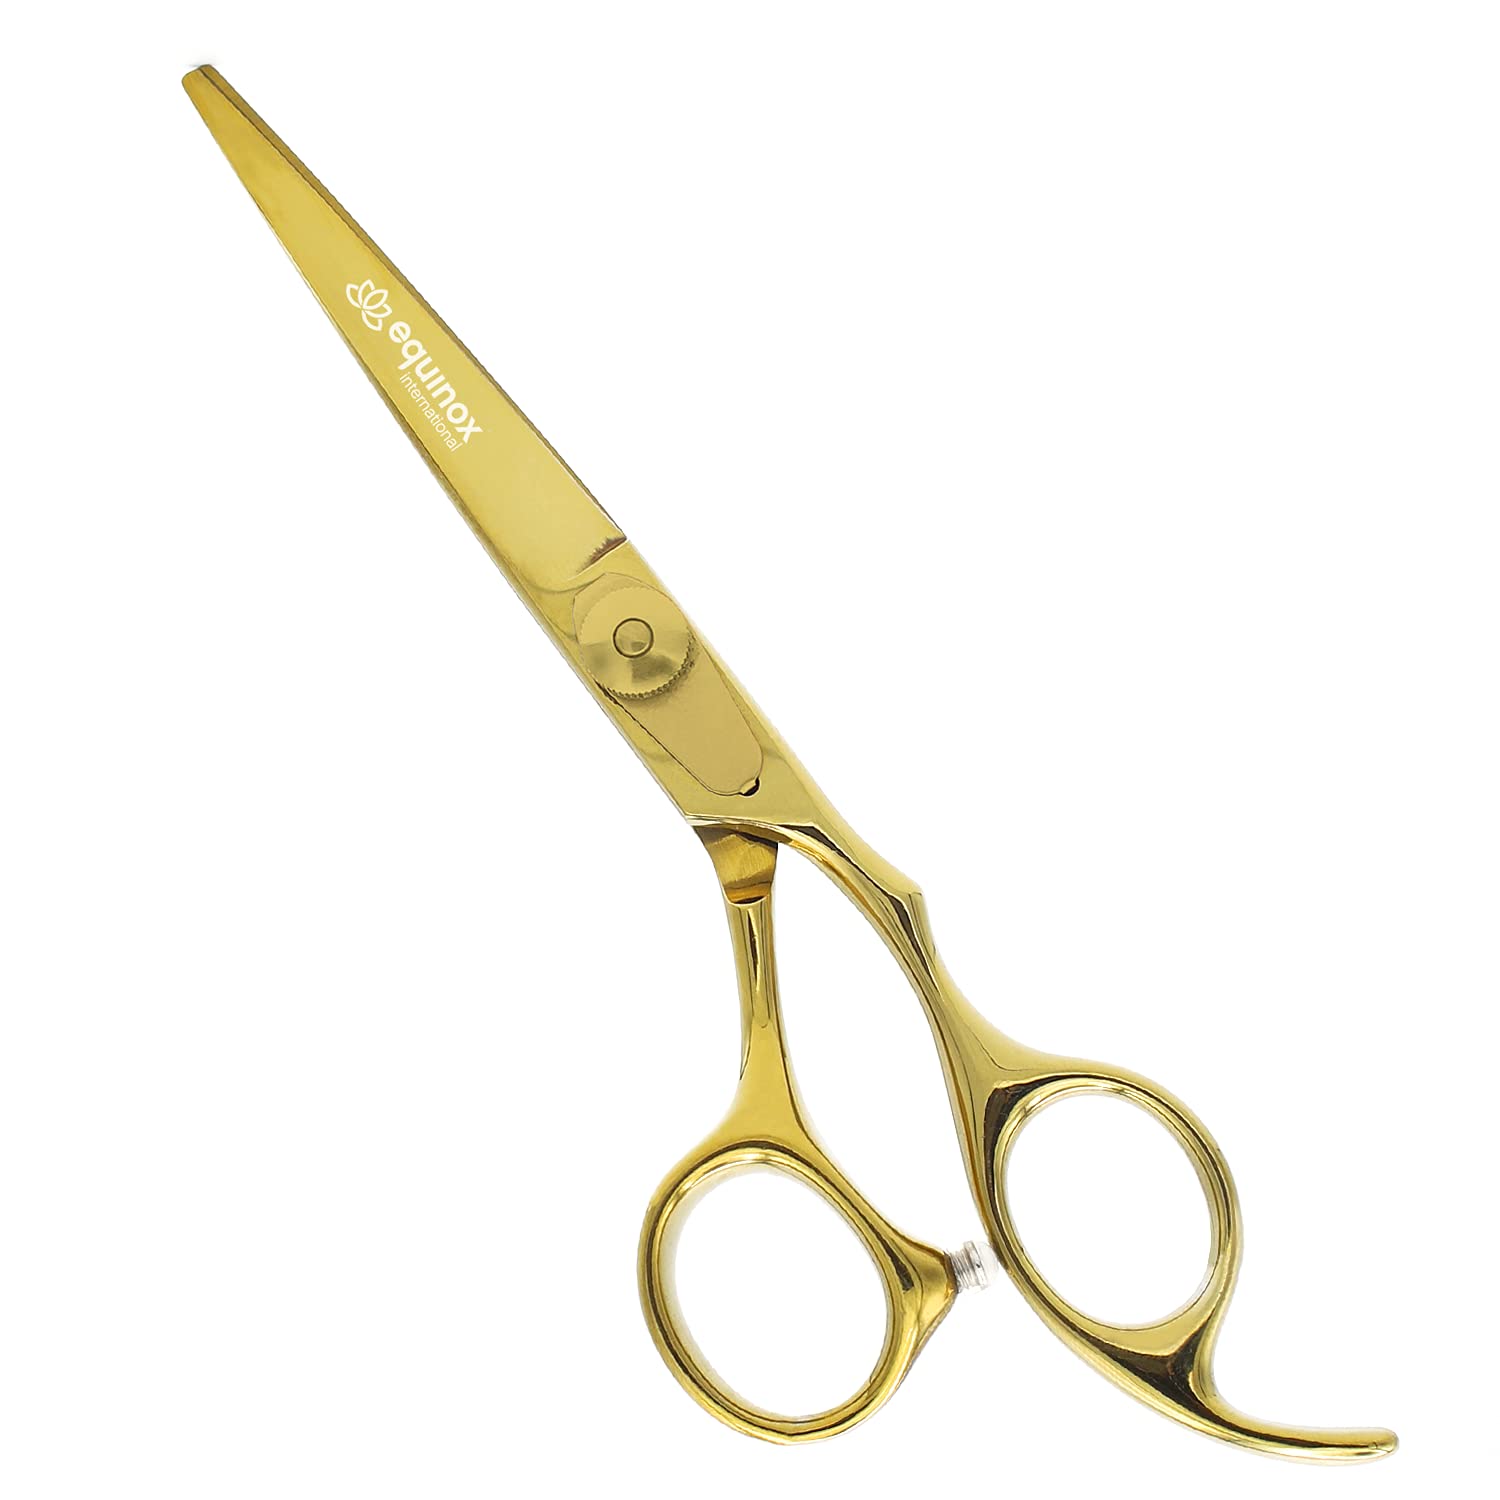 Equinox Professional Series Hair-Cutting Scissors